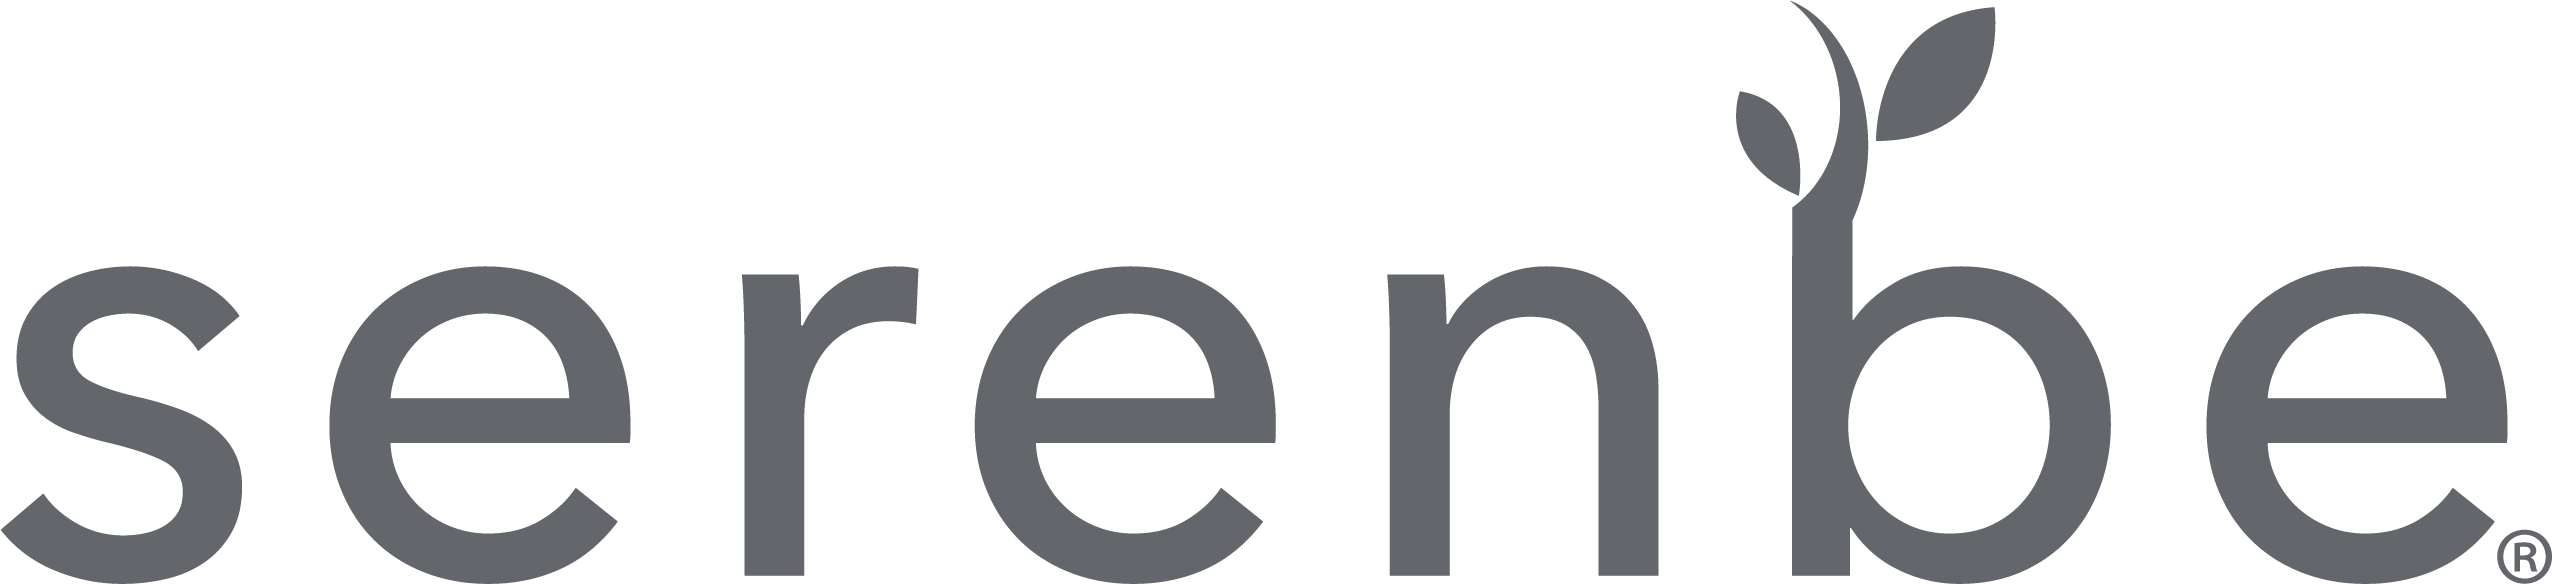 Serenbe Logo